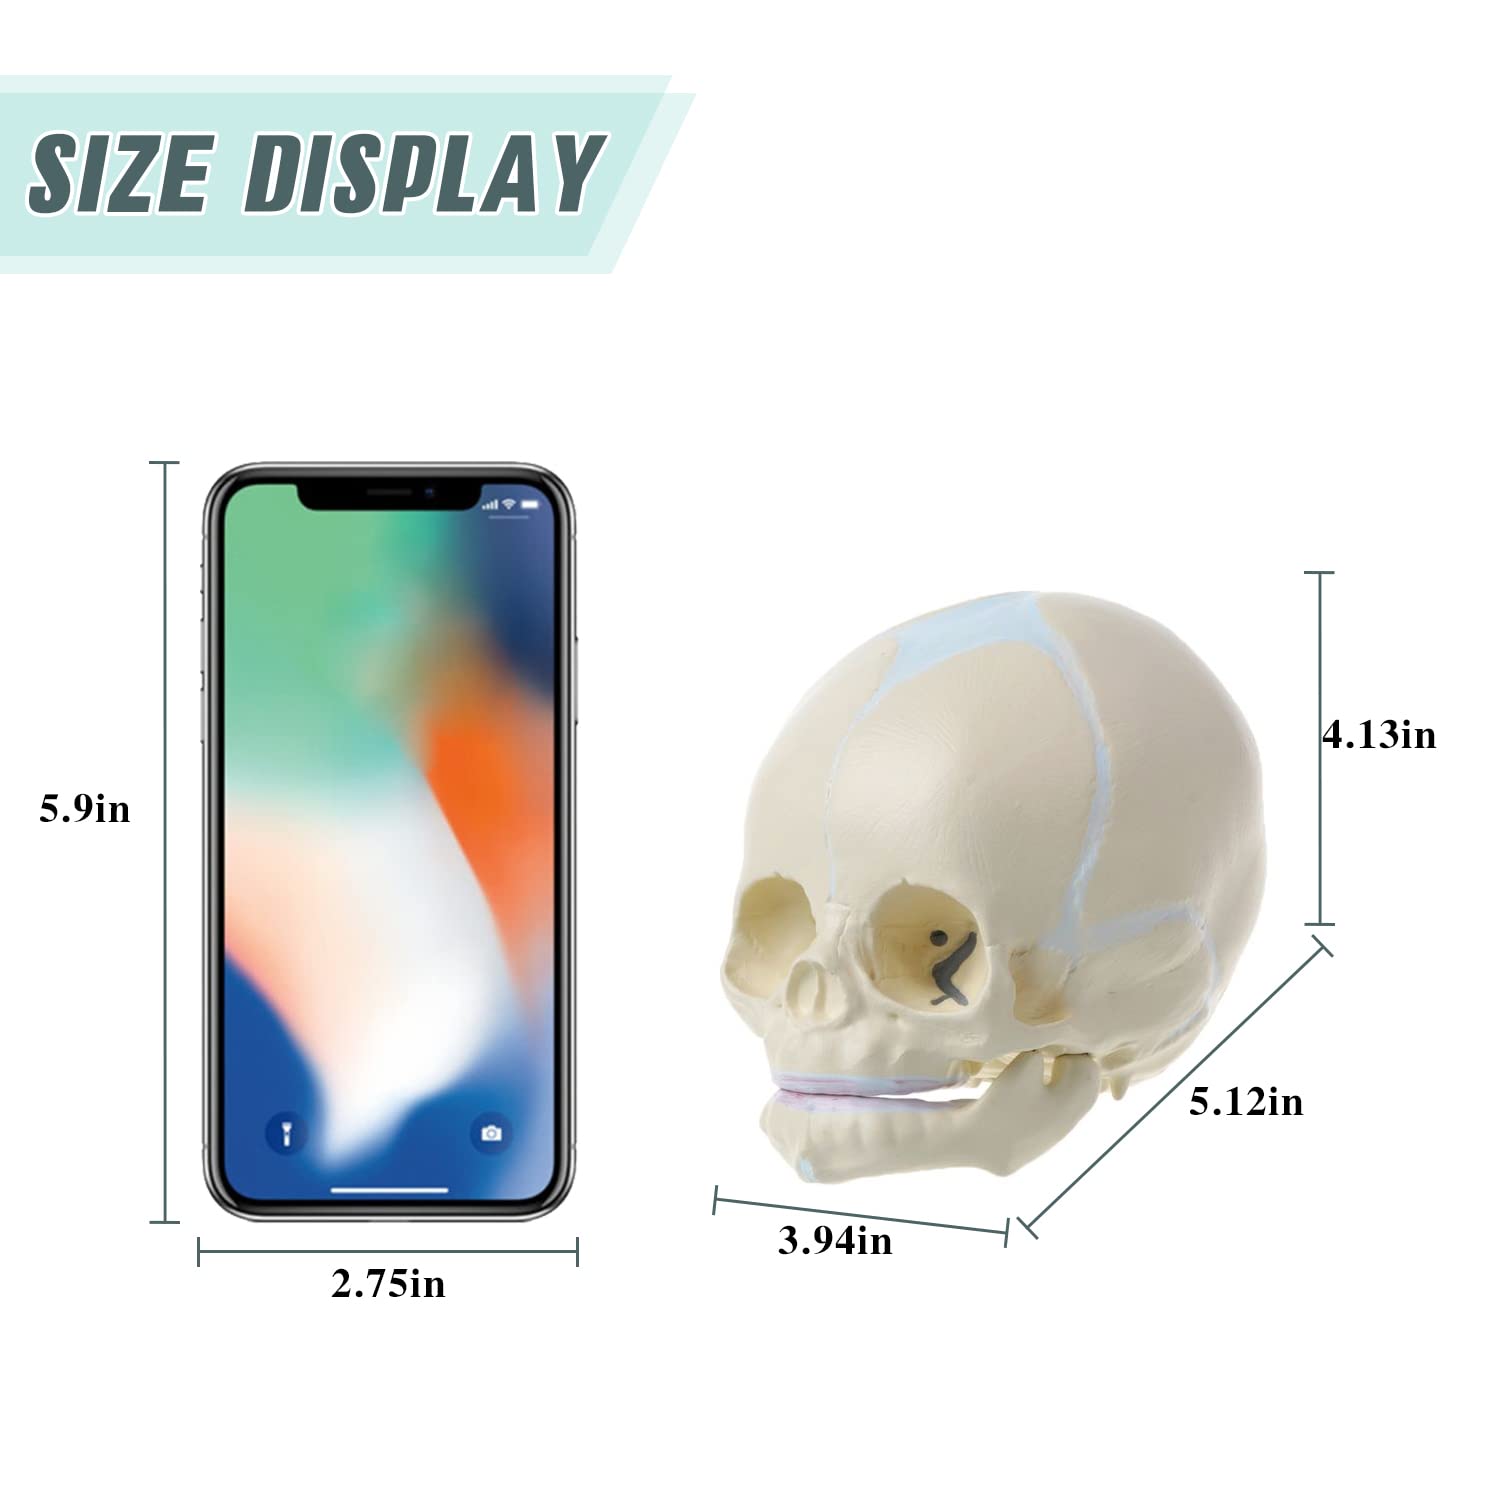 RONTEN Infant Skull Model Life Size Human Fetus Anatomical Skull Model SIZE